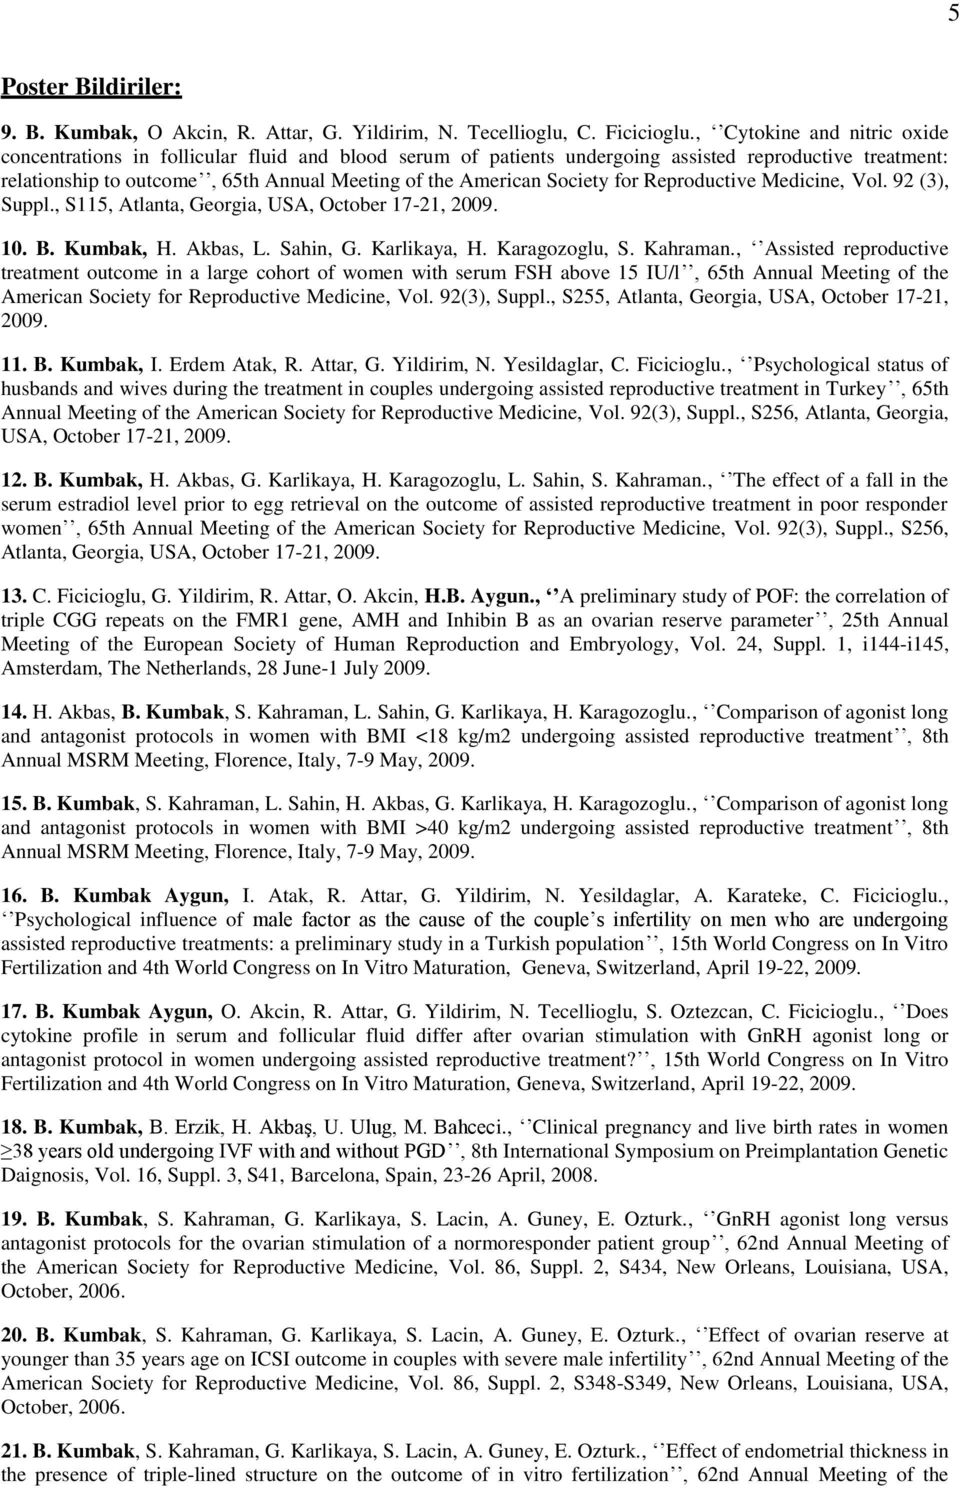 Society for Reproductive Medicine, Vol. 92 (3), Suppl., S115, Atlanta, Georgia, USA, October 17-21, 2009. 10. B. Kumbak, H. Akbas, L. Sahin, G. Karlikaya, H. Karagozoglu, S. Kahraman.